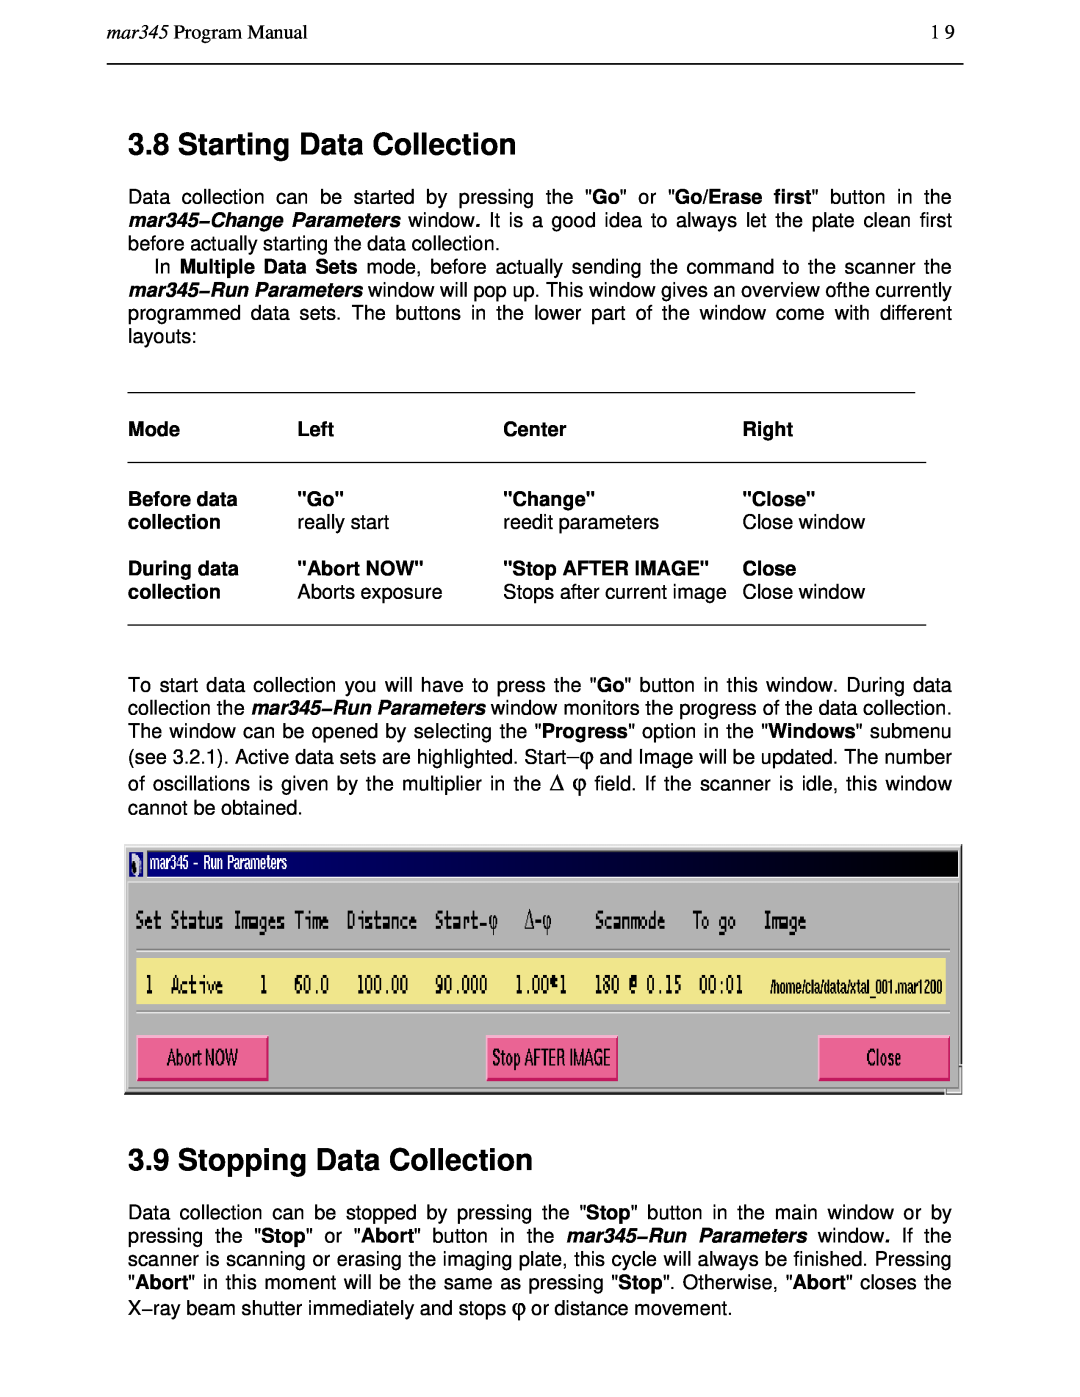 Compaq manual Starting Data Collection, Stopping Data Collection, mar345 Program Manual 